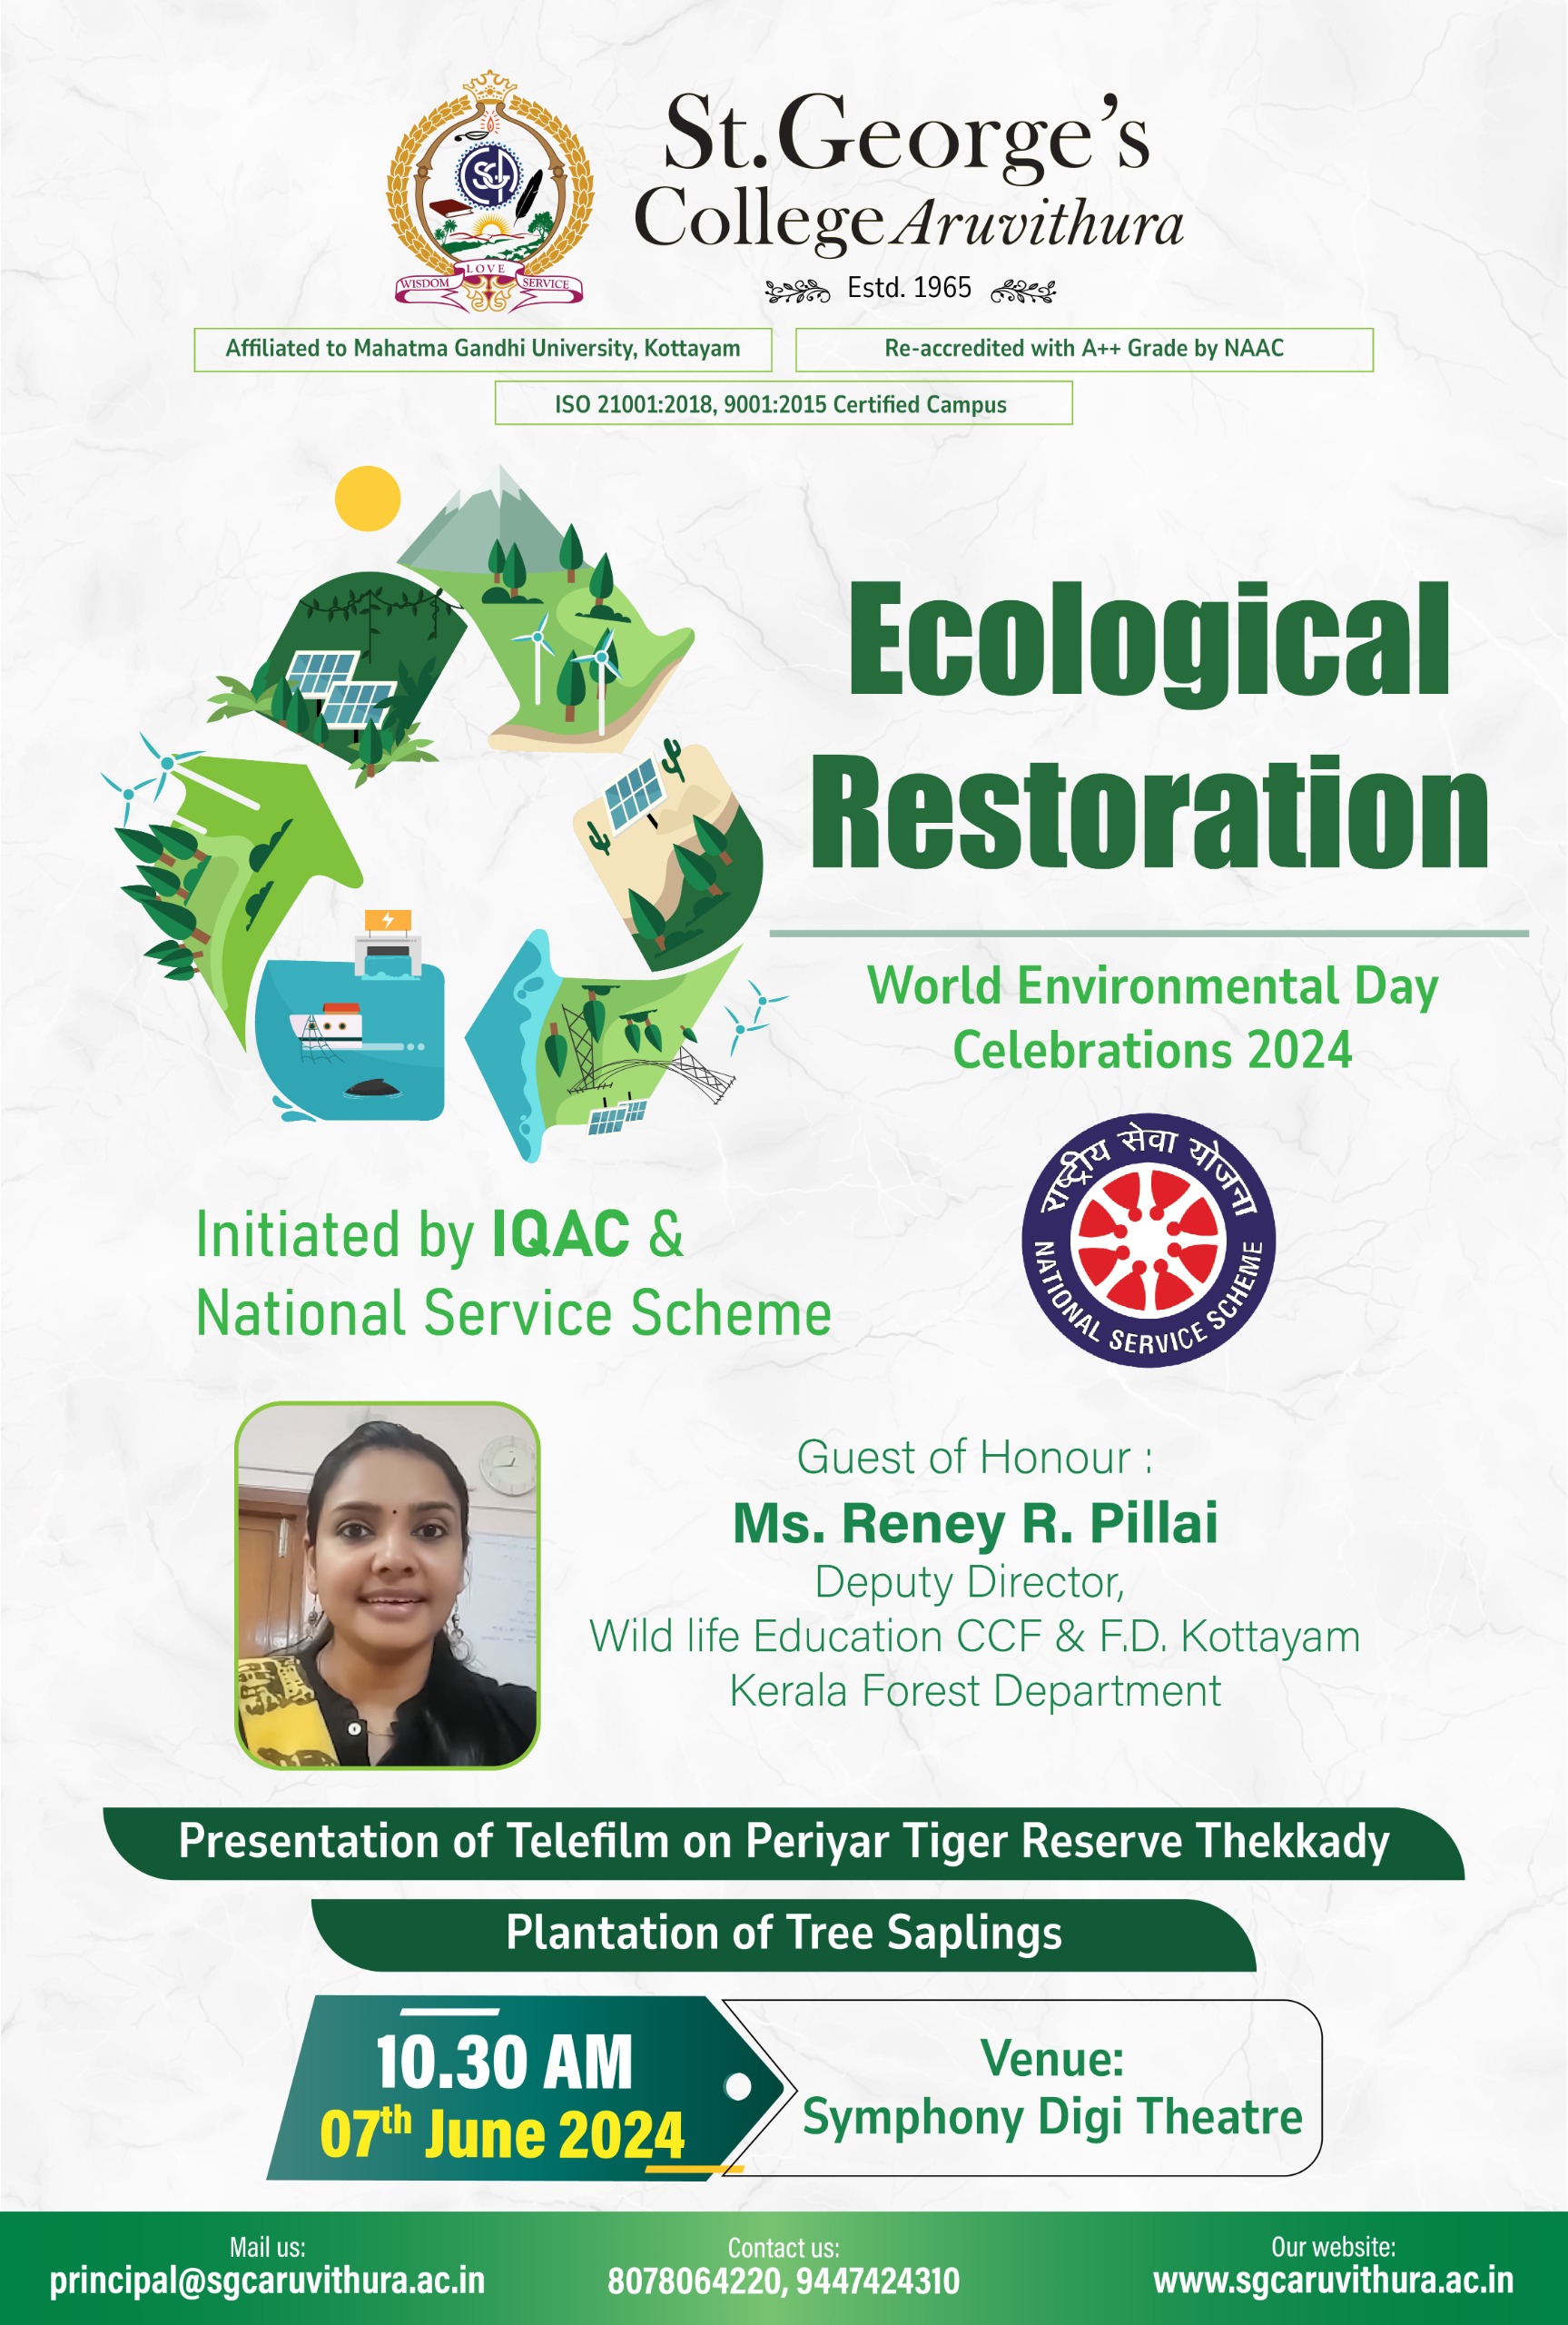 Ecological Restoration - Environment Day Celebration